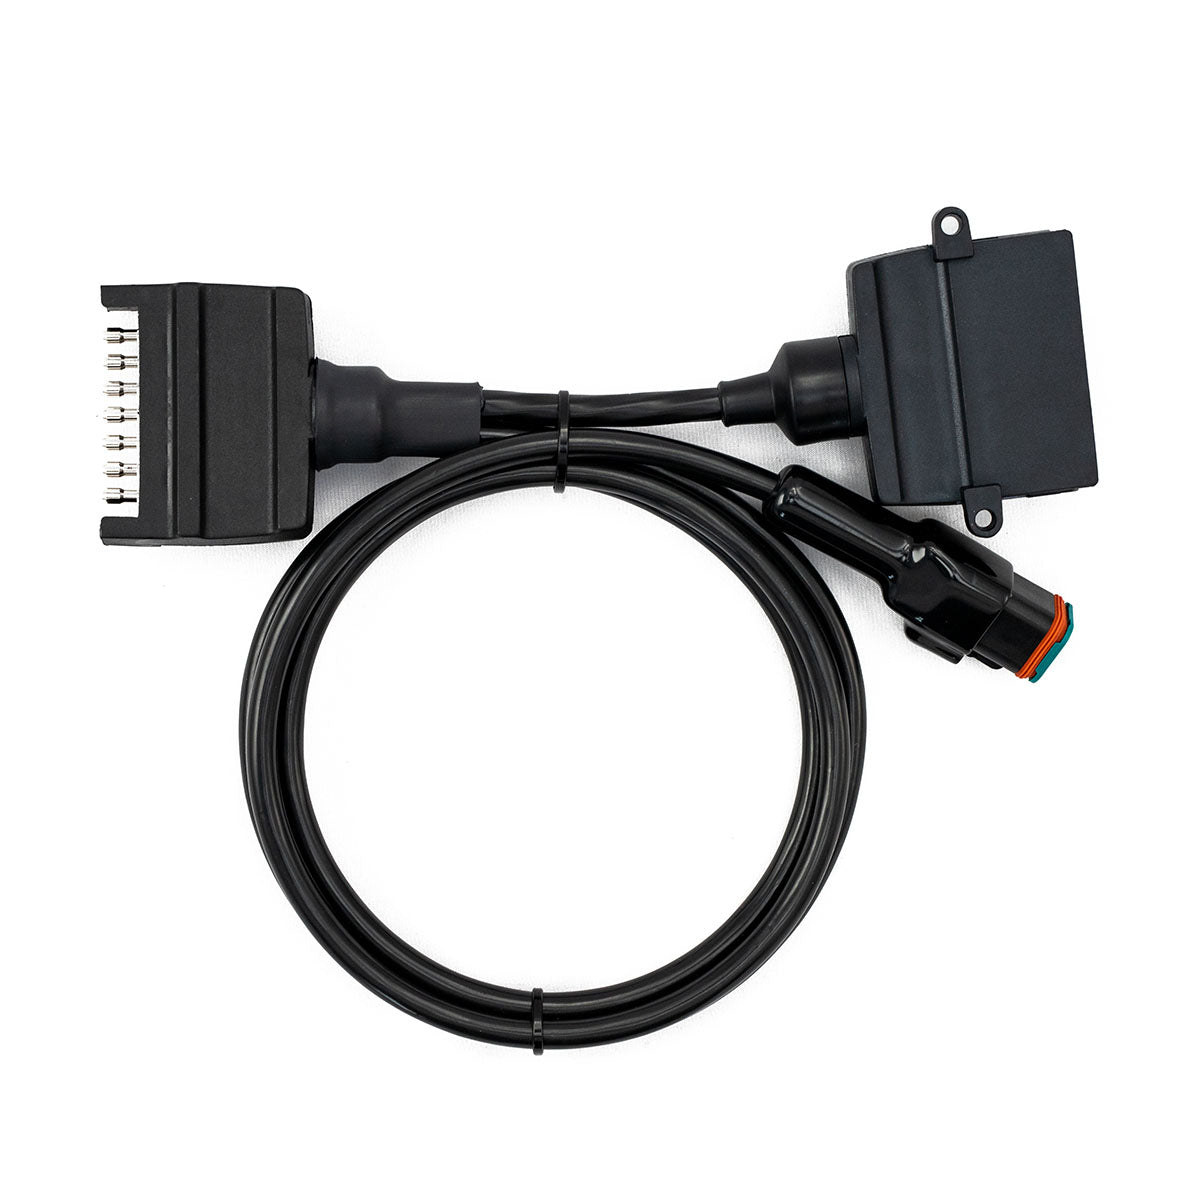 Elecbrakes Plug & Play Adaptor A7-7